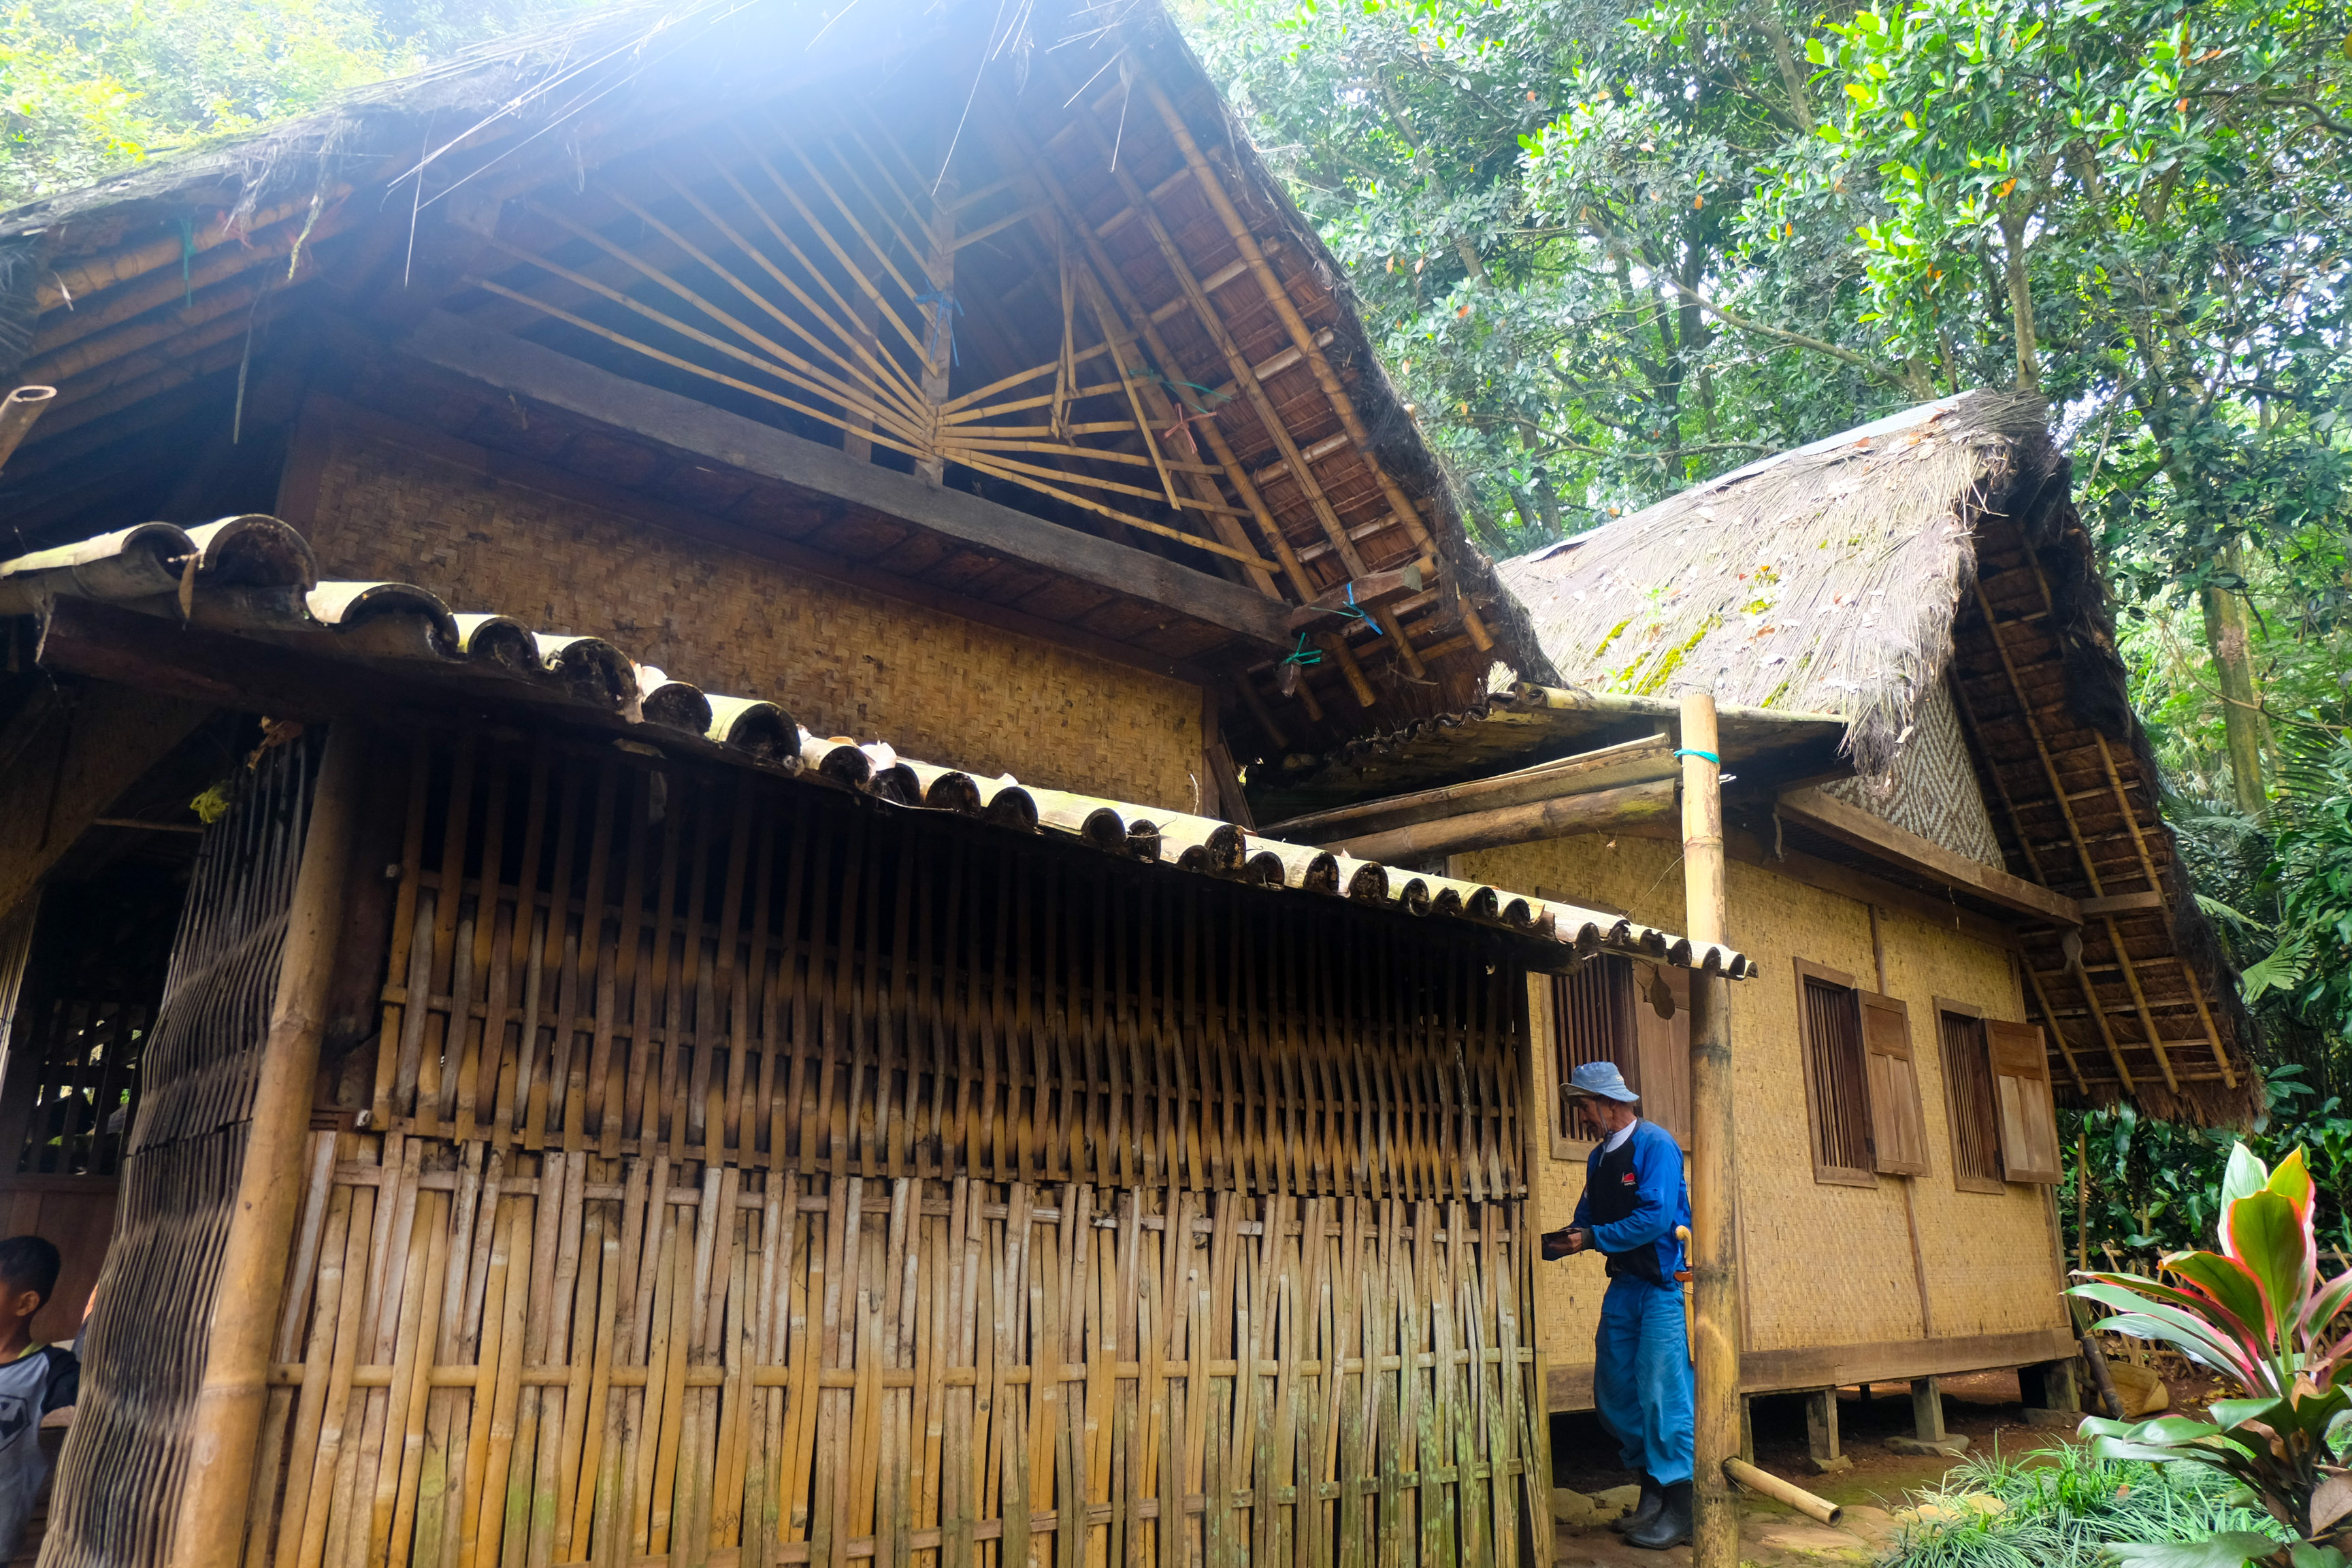 Rumah Adat Suku Sunda Dan Penjelasannya - Denah Rumah